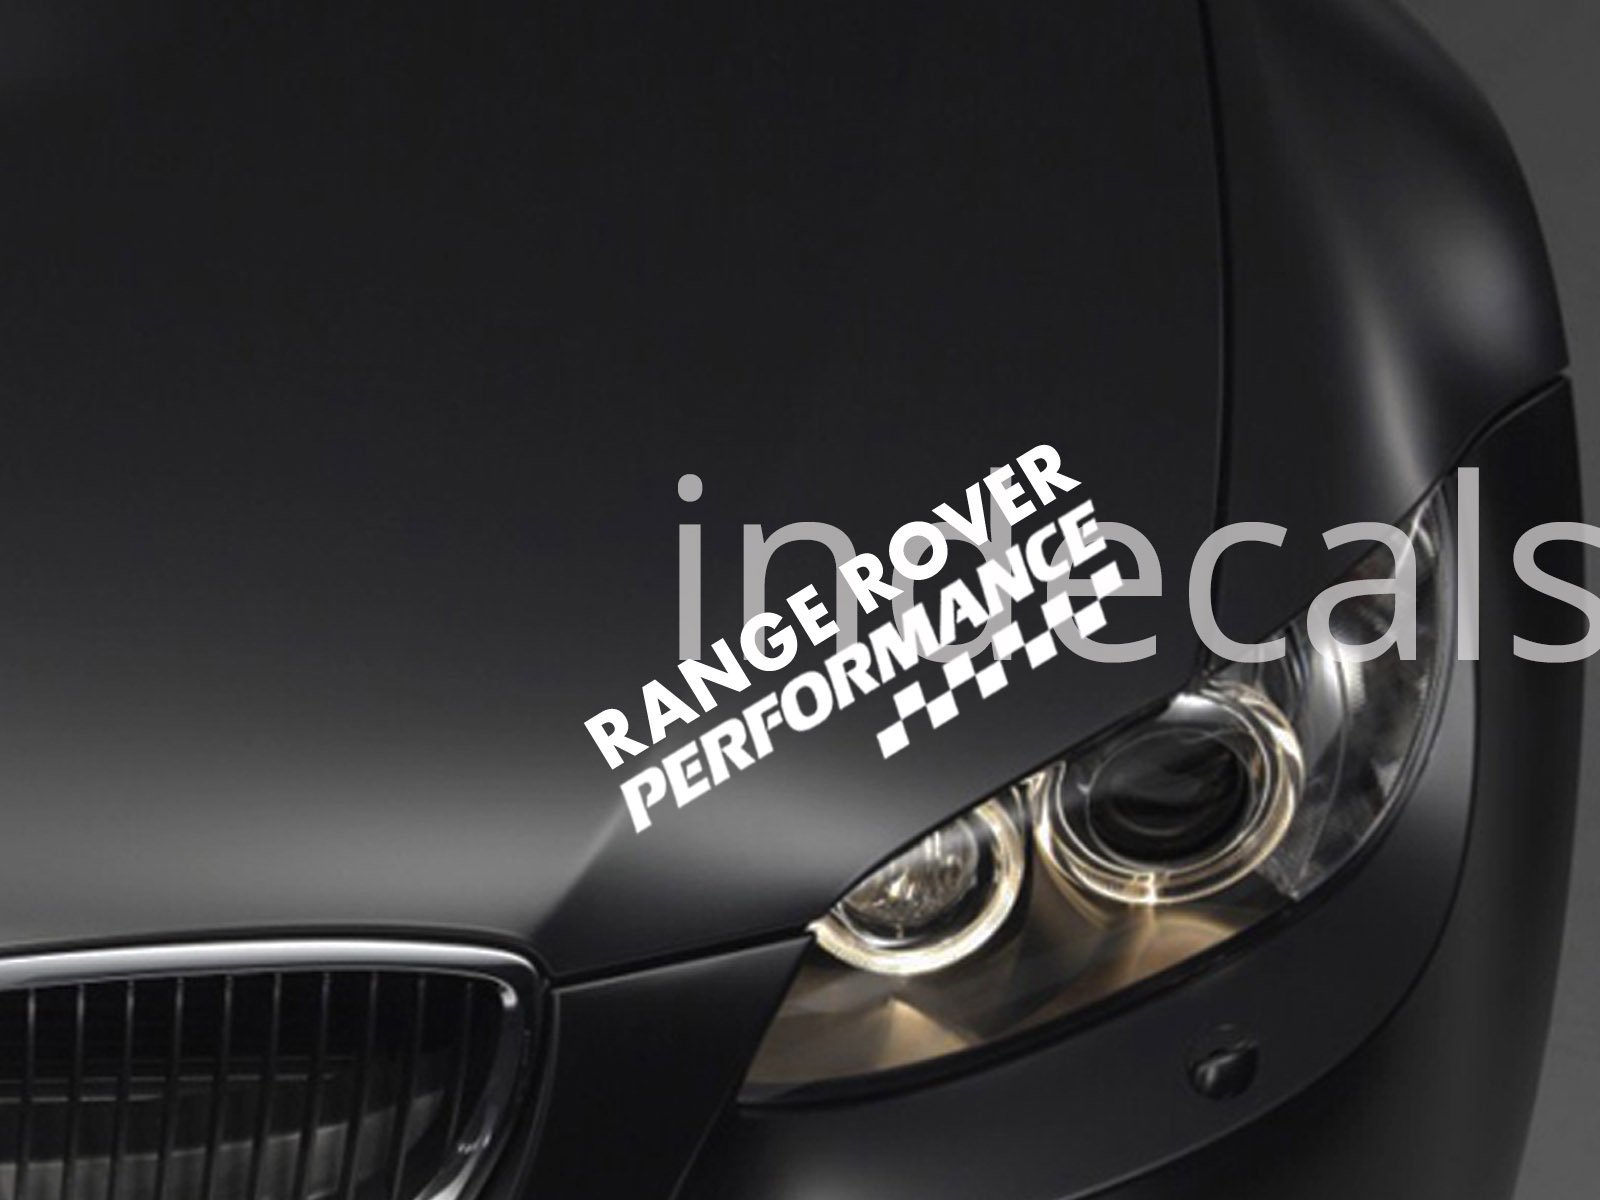 1 x Range Rover Performance Sticker for Eyebrow - White